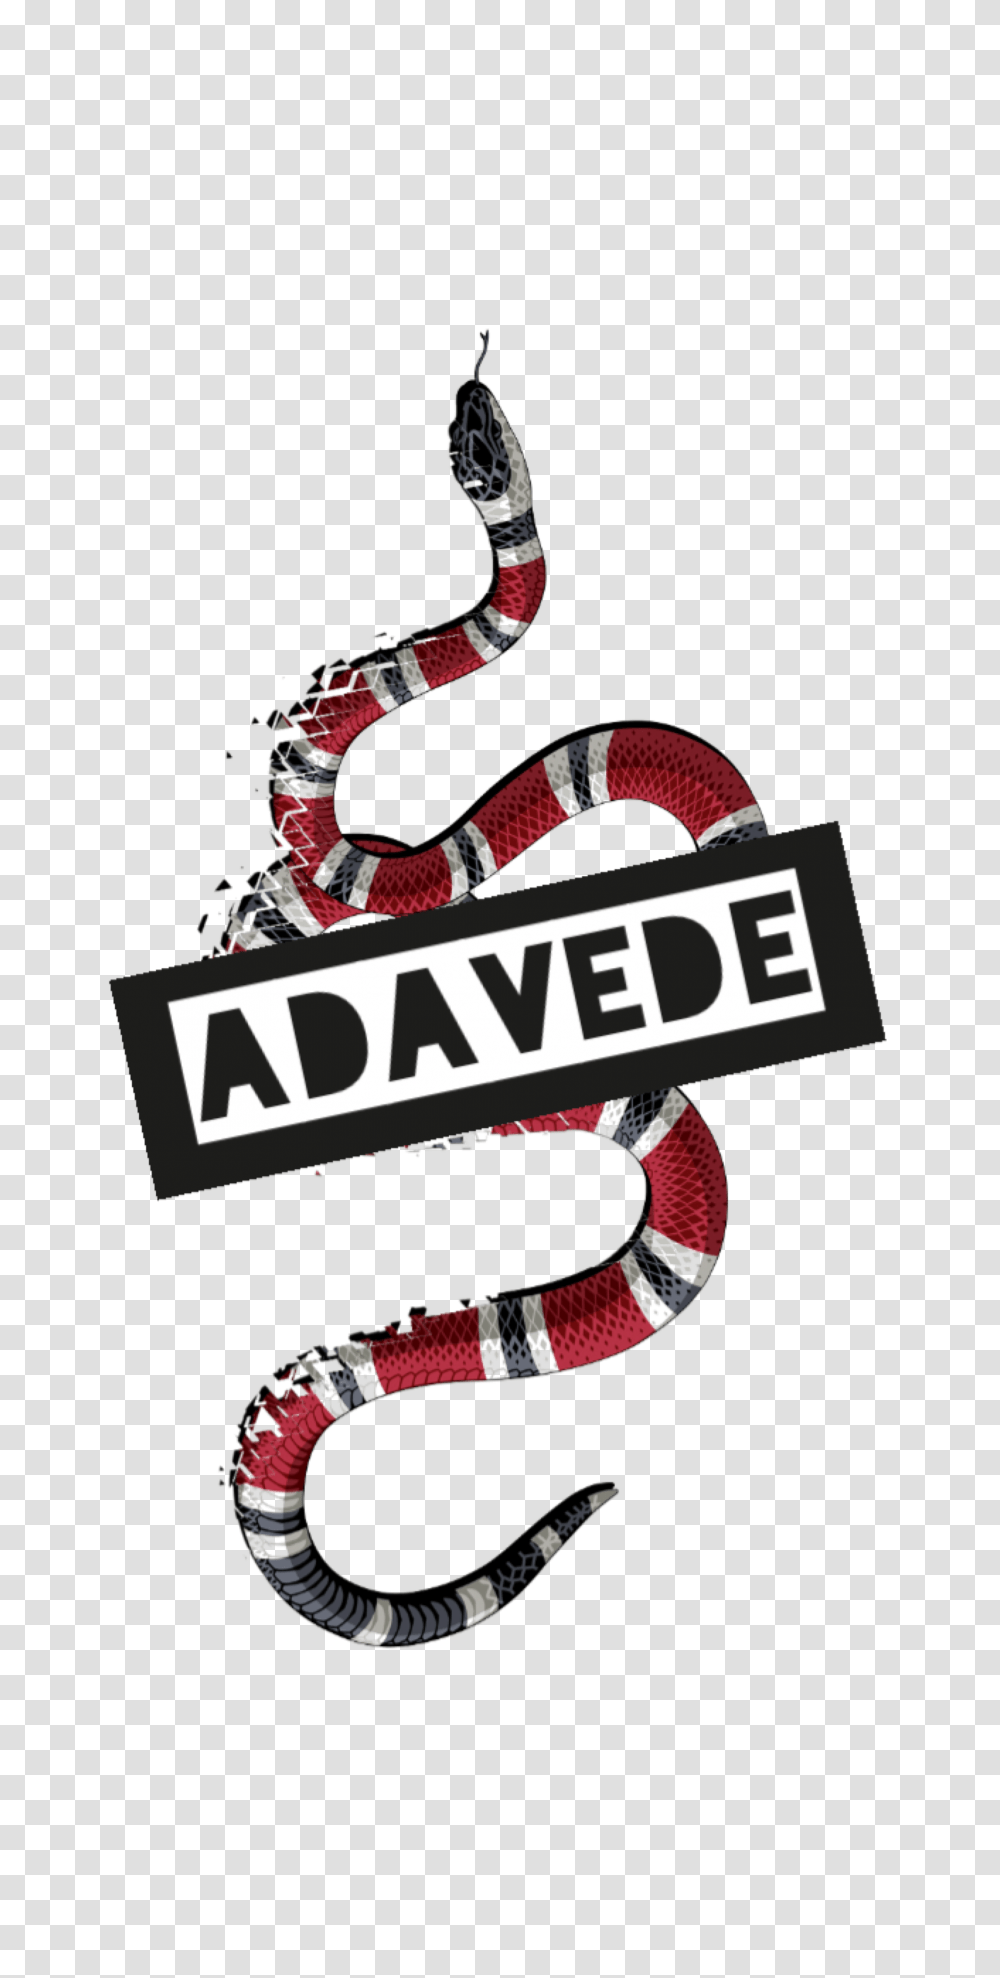 Adavede Gucci Snake Creata Da Stampa La Cover, Animal, King Snake, Reptile, Person Transparent Png